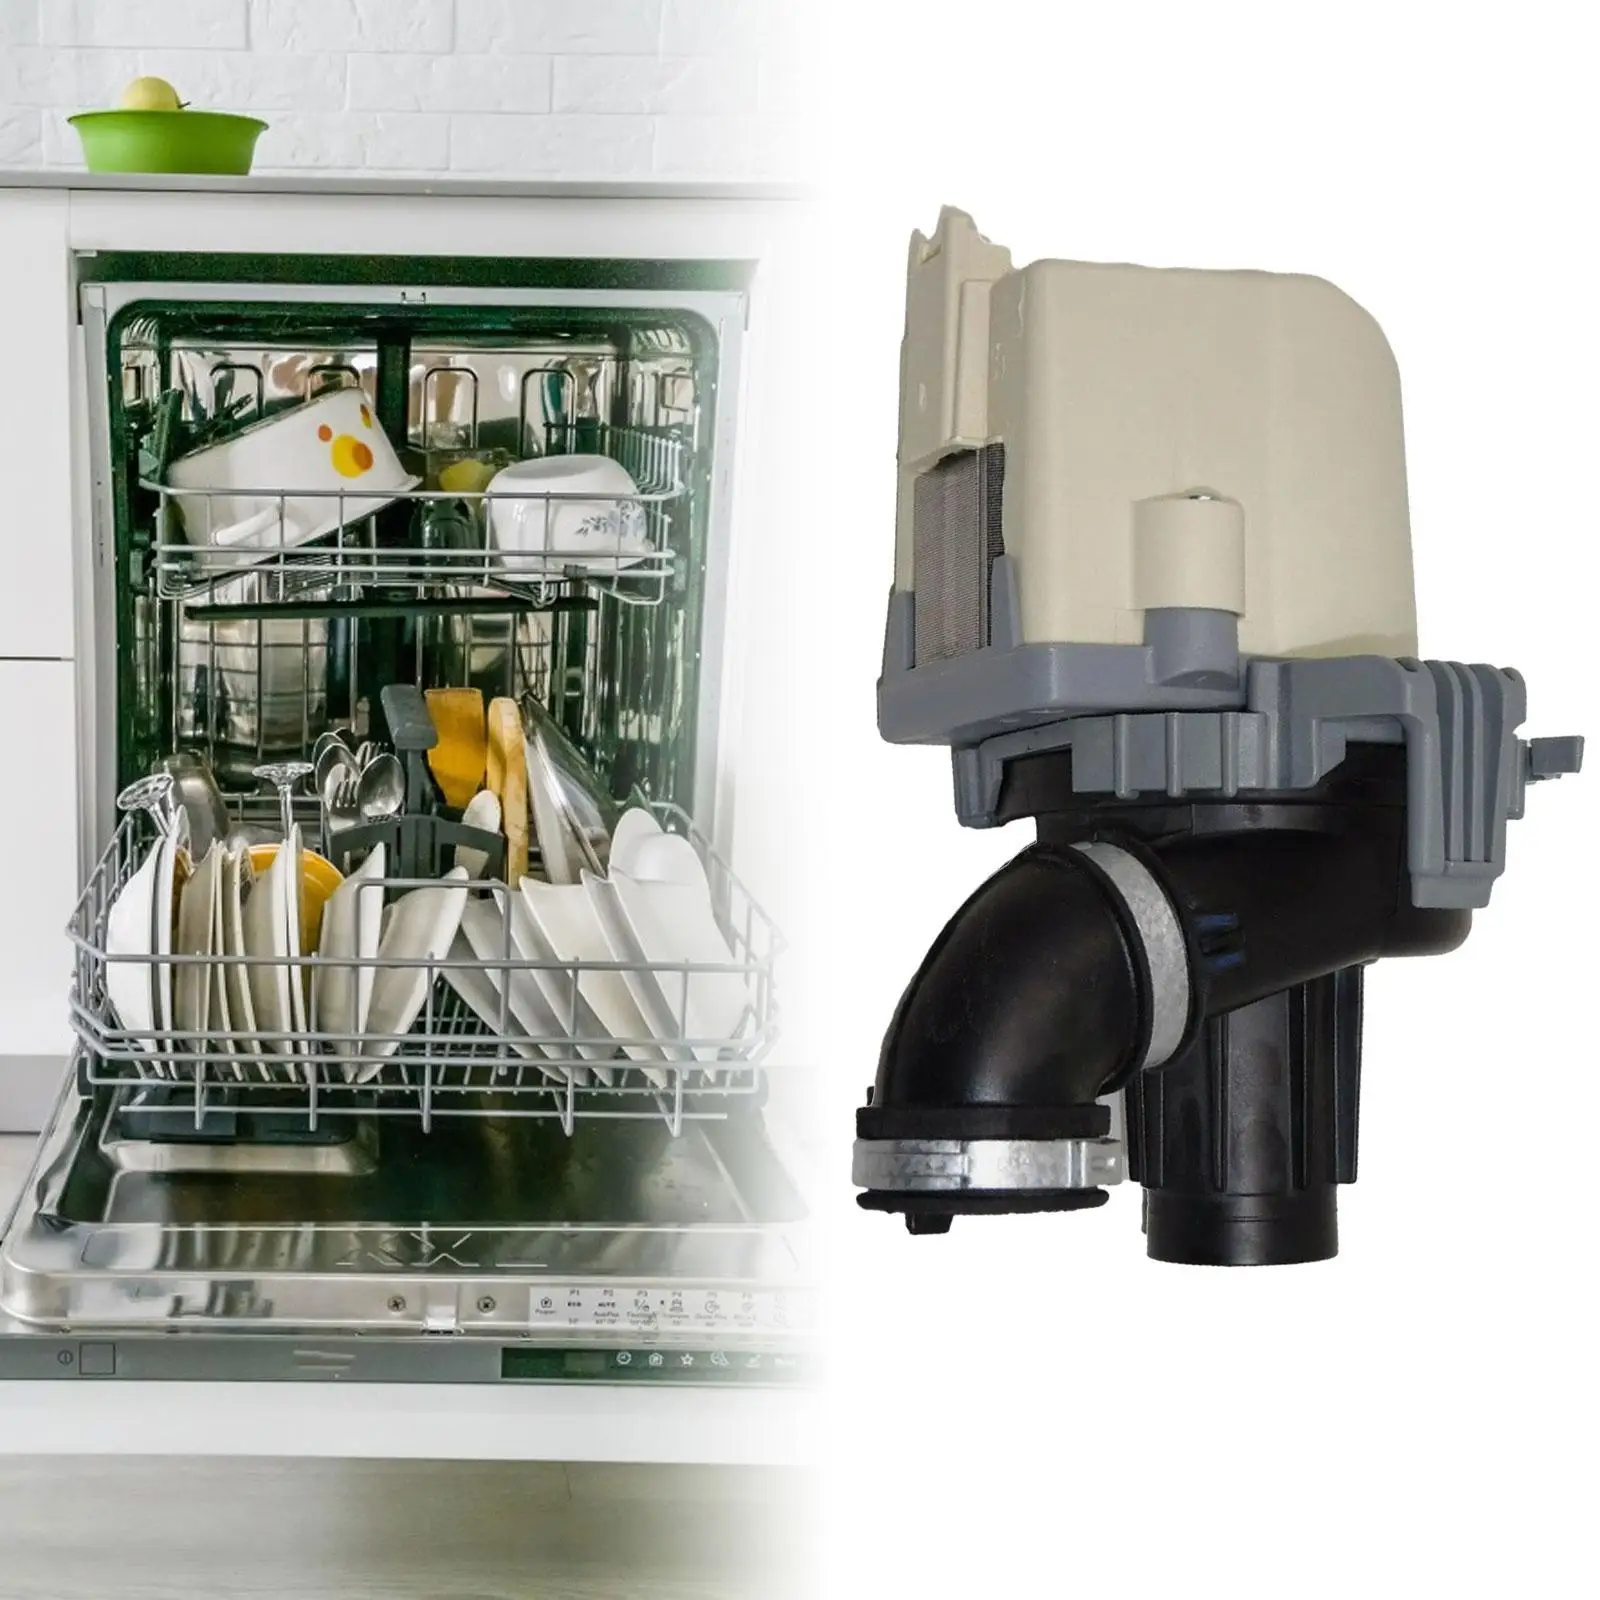 Dishwashers Pump Motor Assembly Washing Machine Drain Pump Heat Pump for W10816492 W10885542 Wpw10529163 W10529163 Accessory